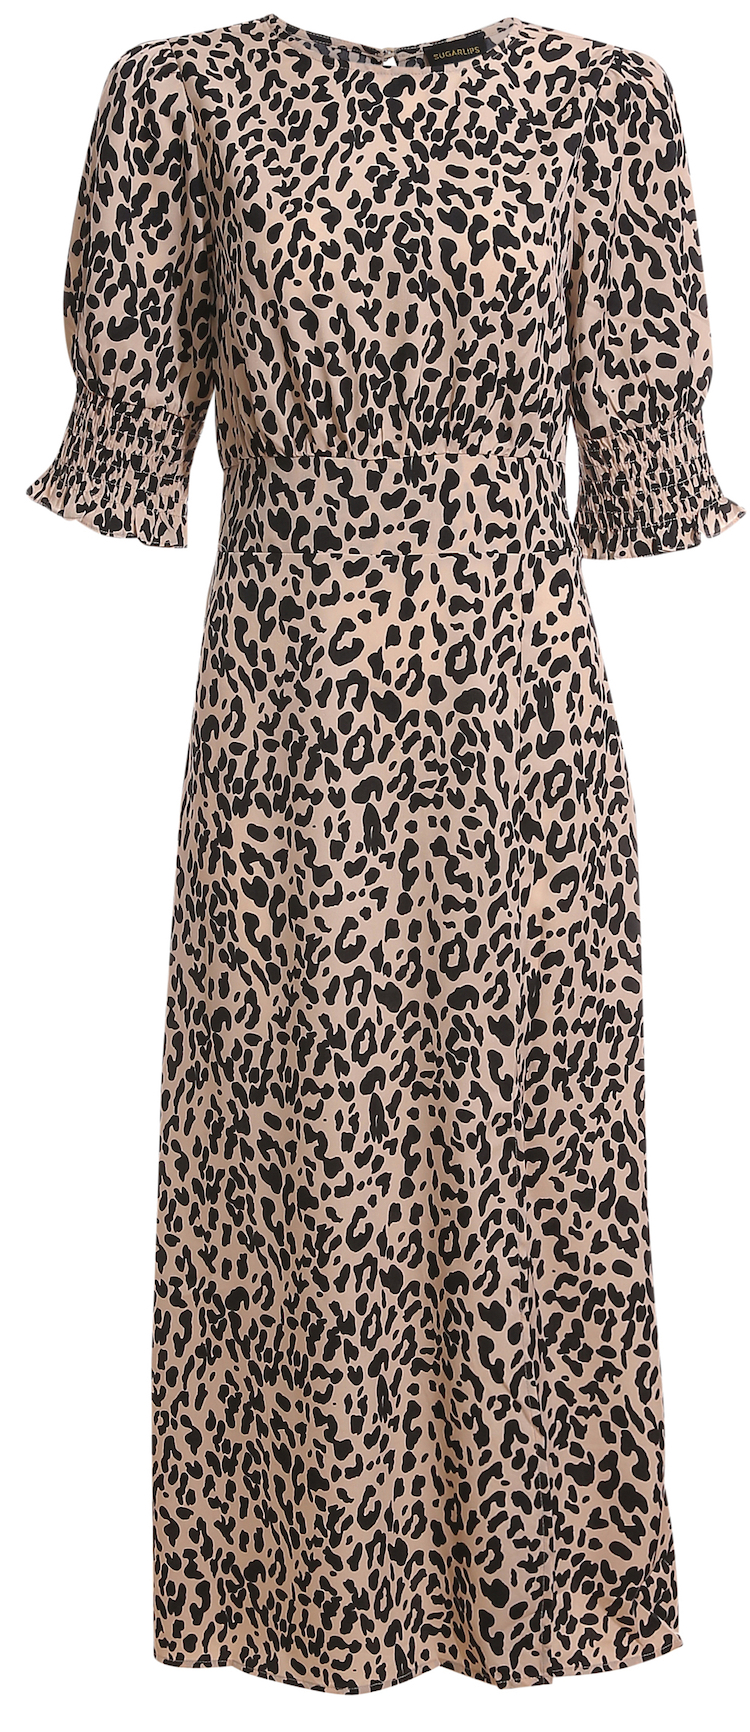 Cheetah Print Maxi Dress